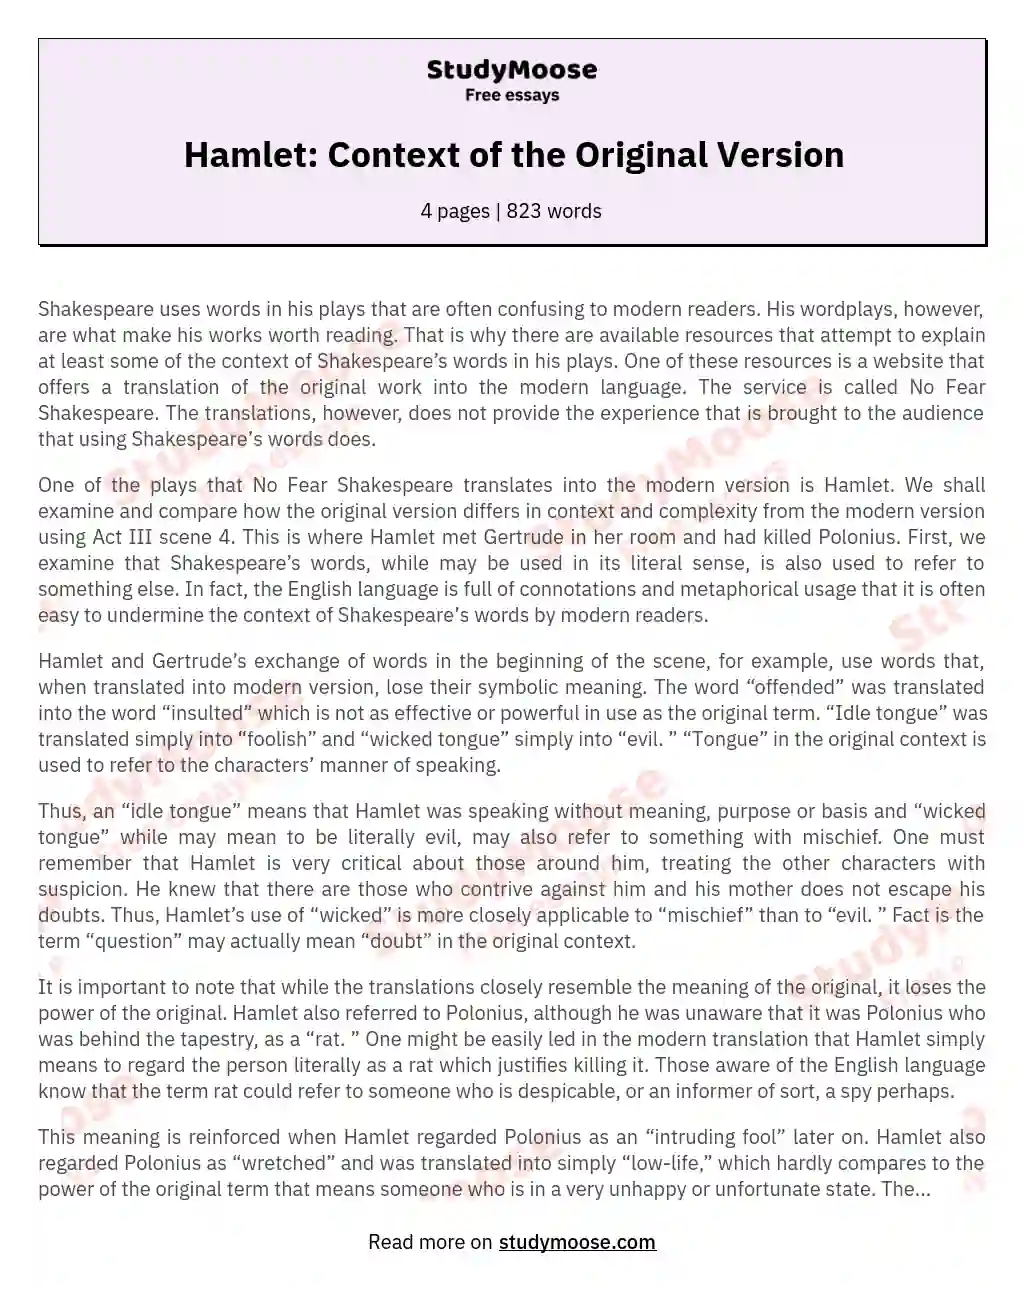 Hamlet: Context of the Original Version essay